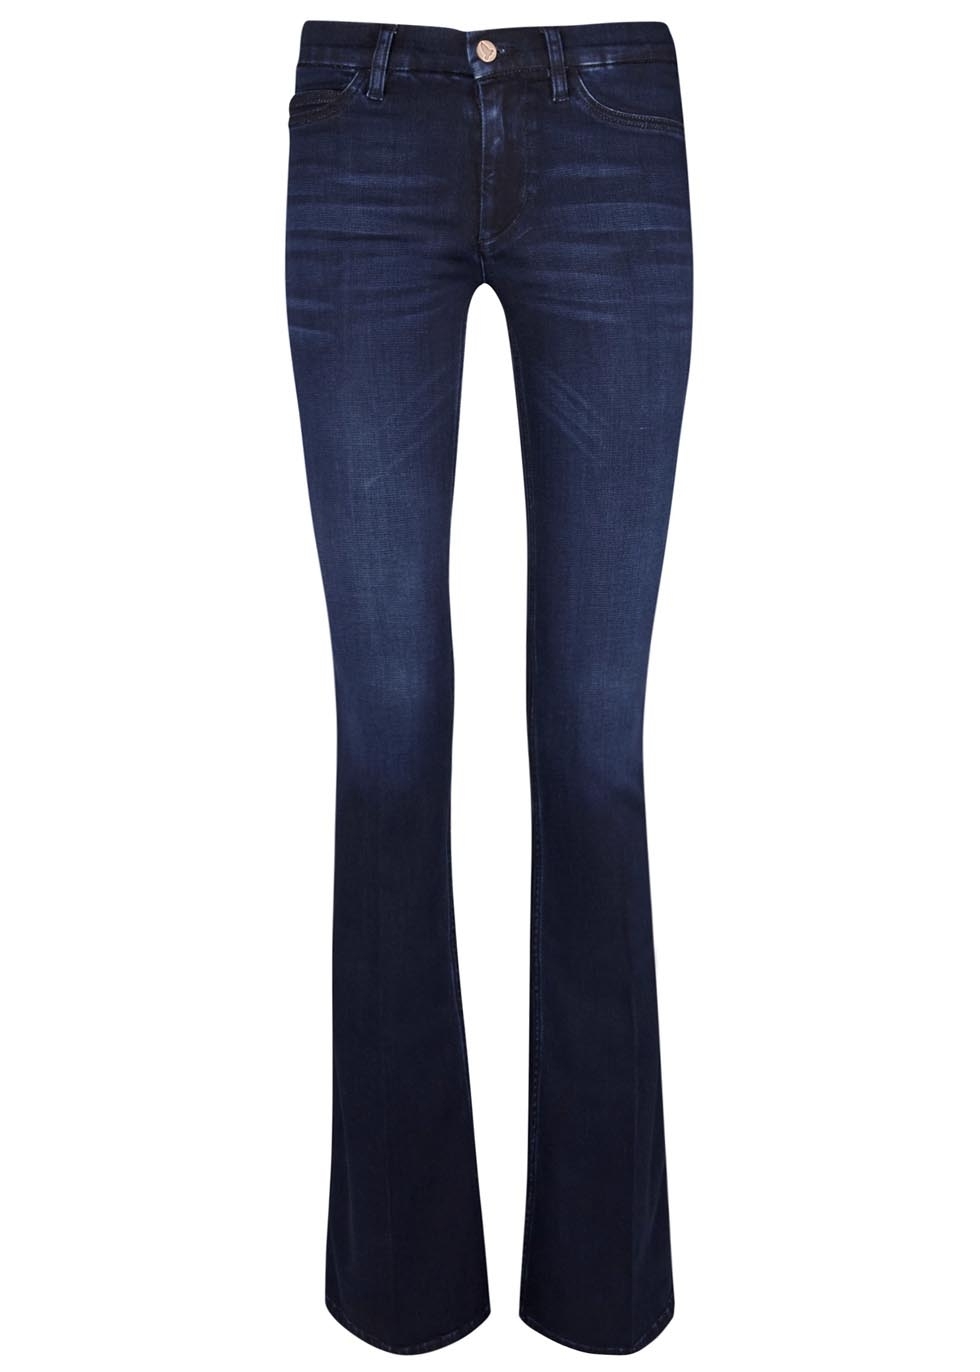 The Skinny Marakesh indigo flared jeans